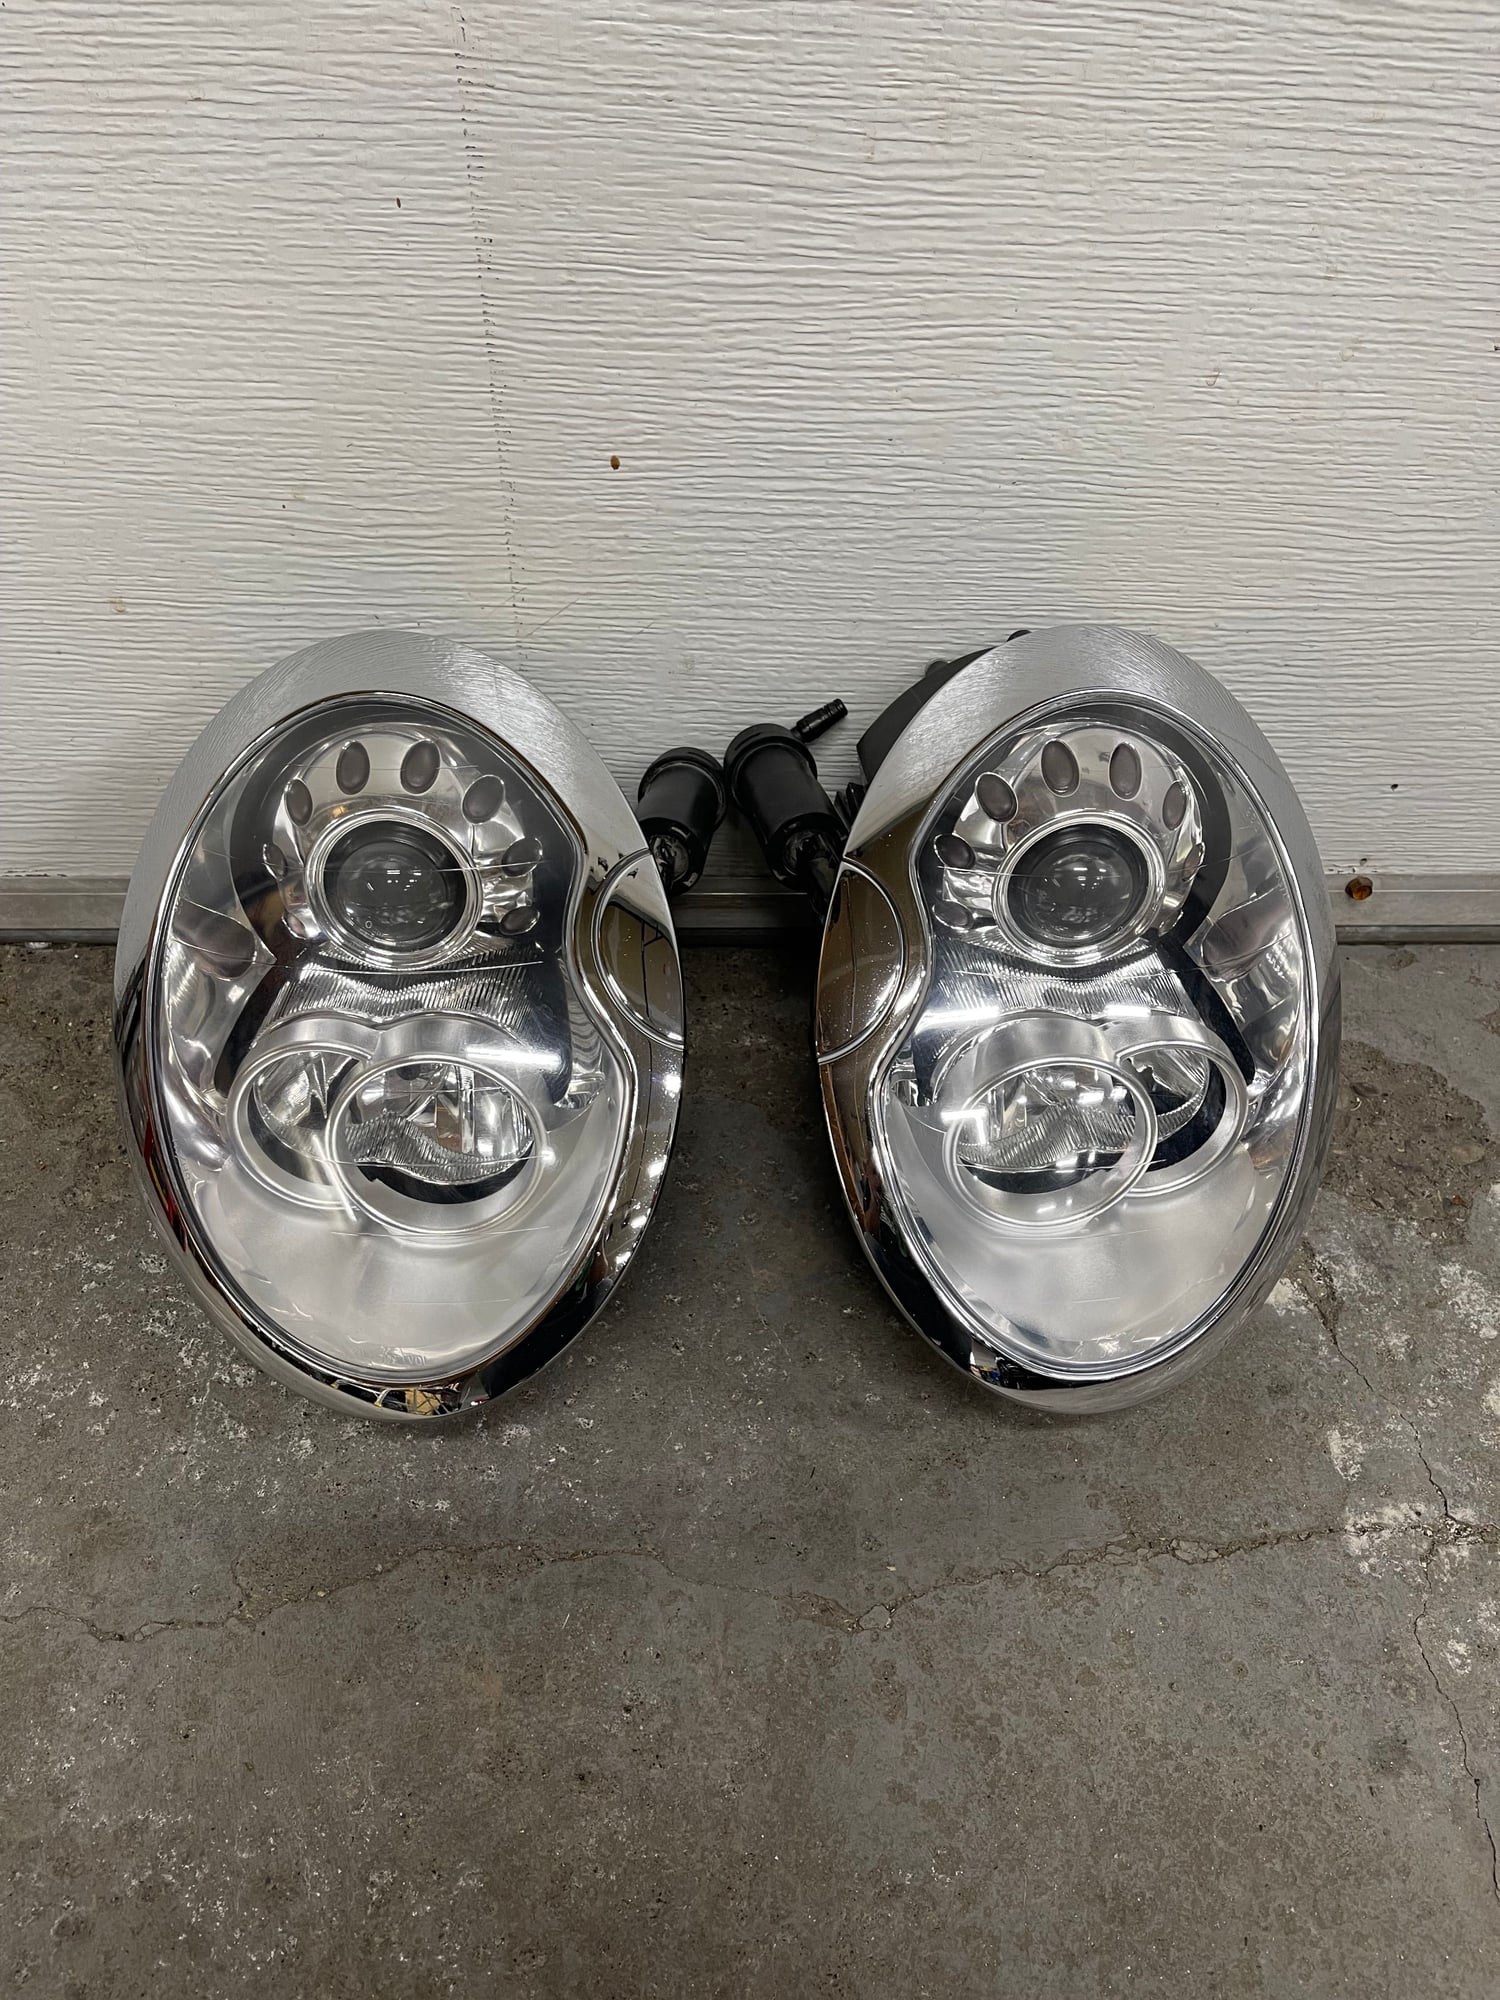 Lights - 05-06 FL Xenon Headlights - Used - 2002 to 2008 Mini Cooper - Idaho Falls, ID 83402, United States